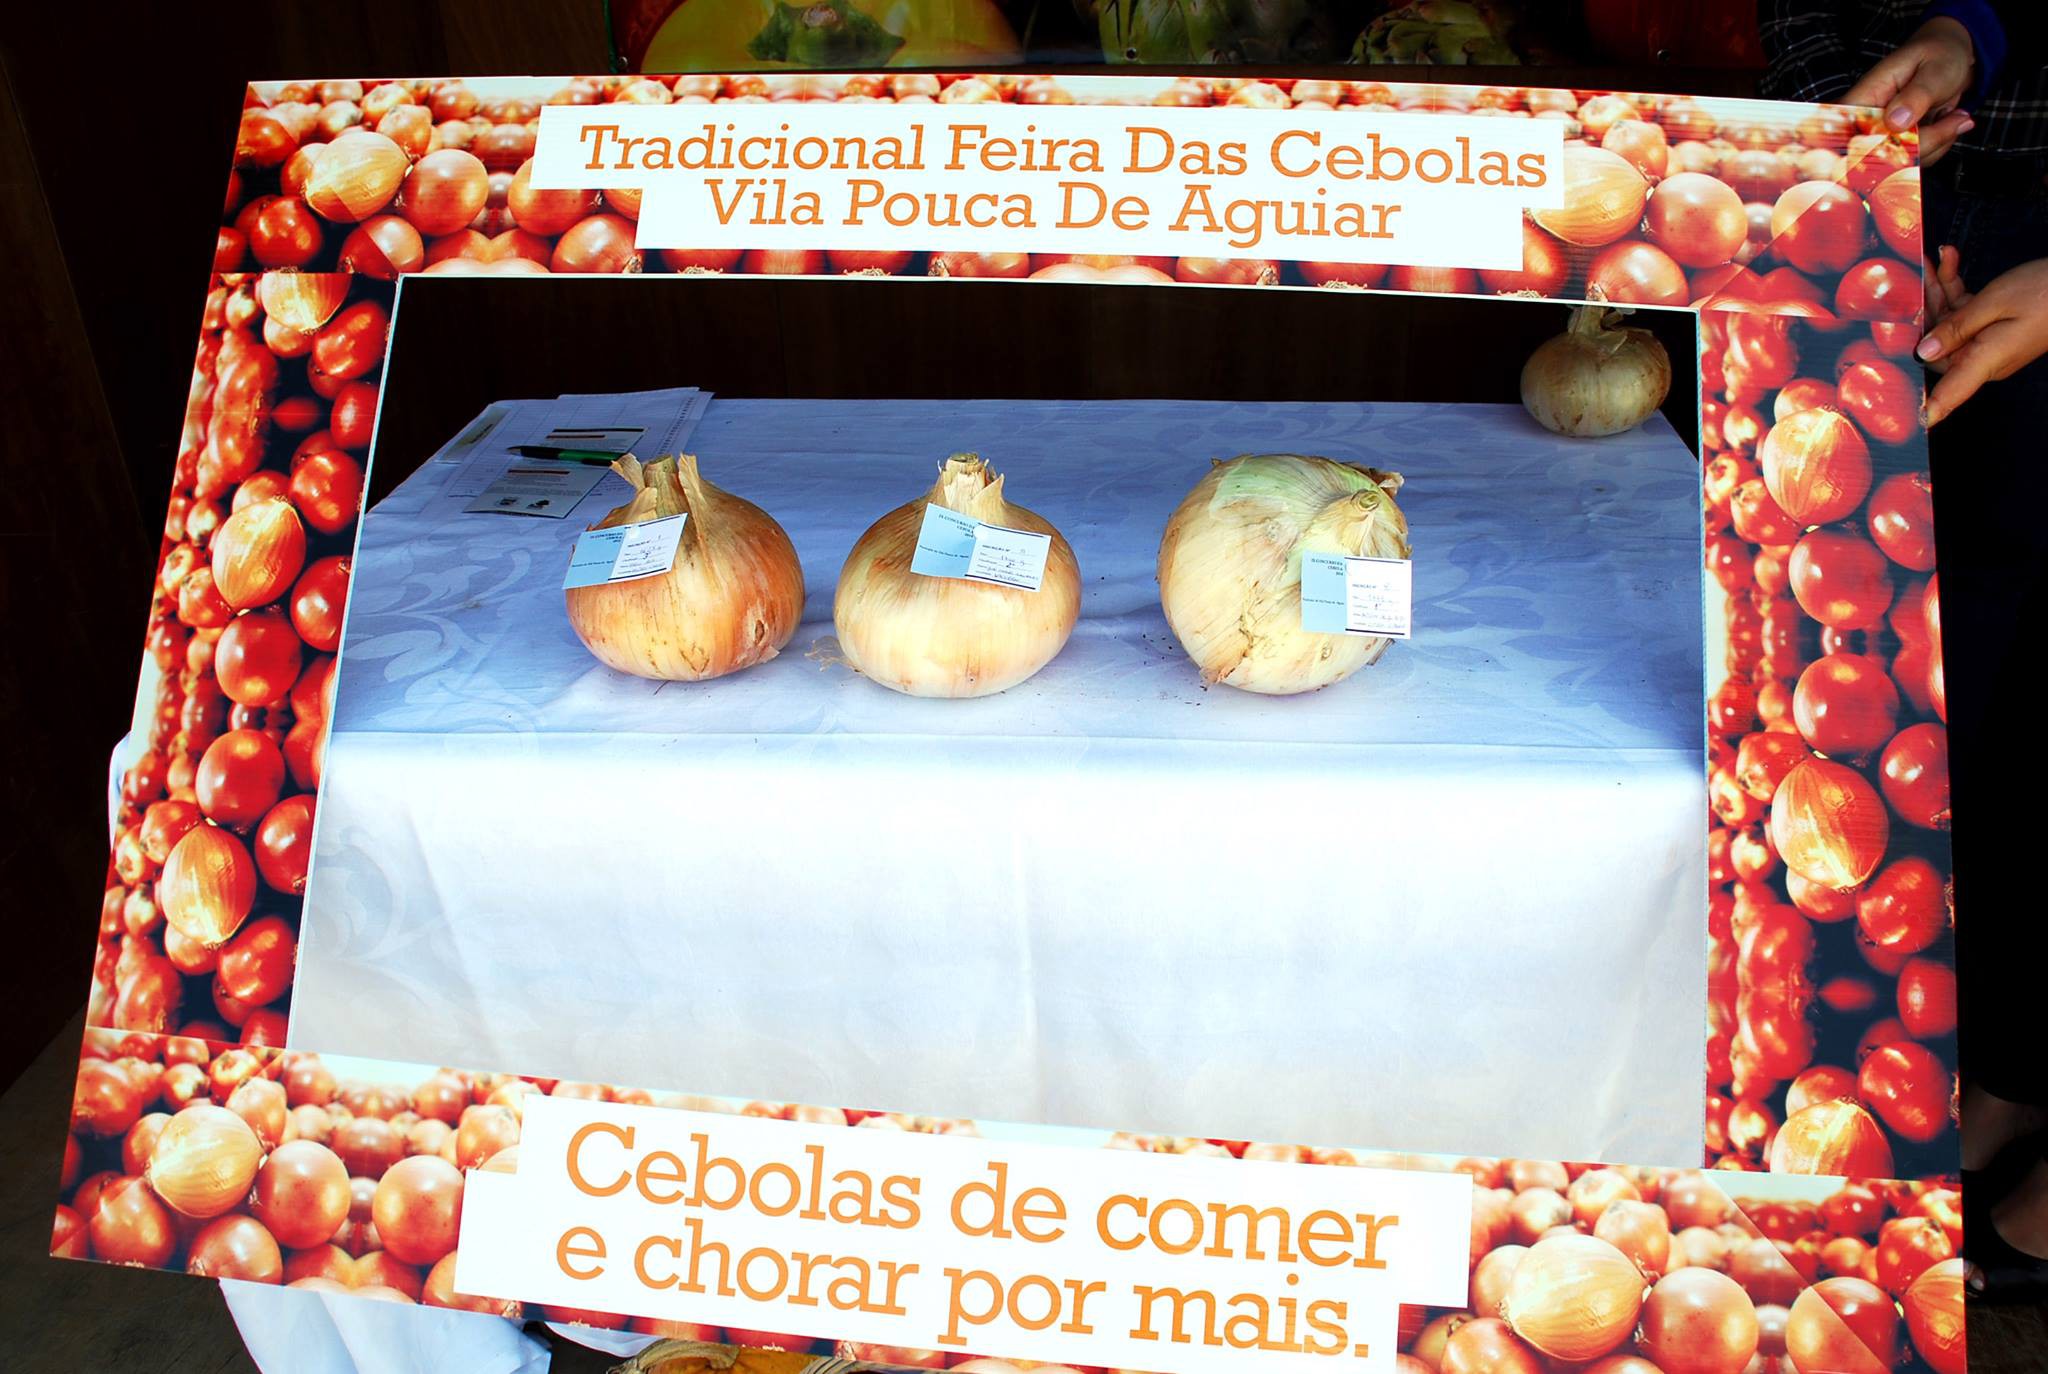 Vila Pouca de Aguiar põe à venda 20 toneladas de cebolas